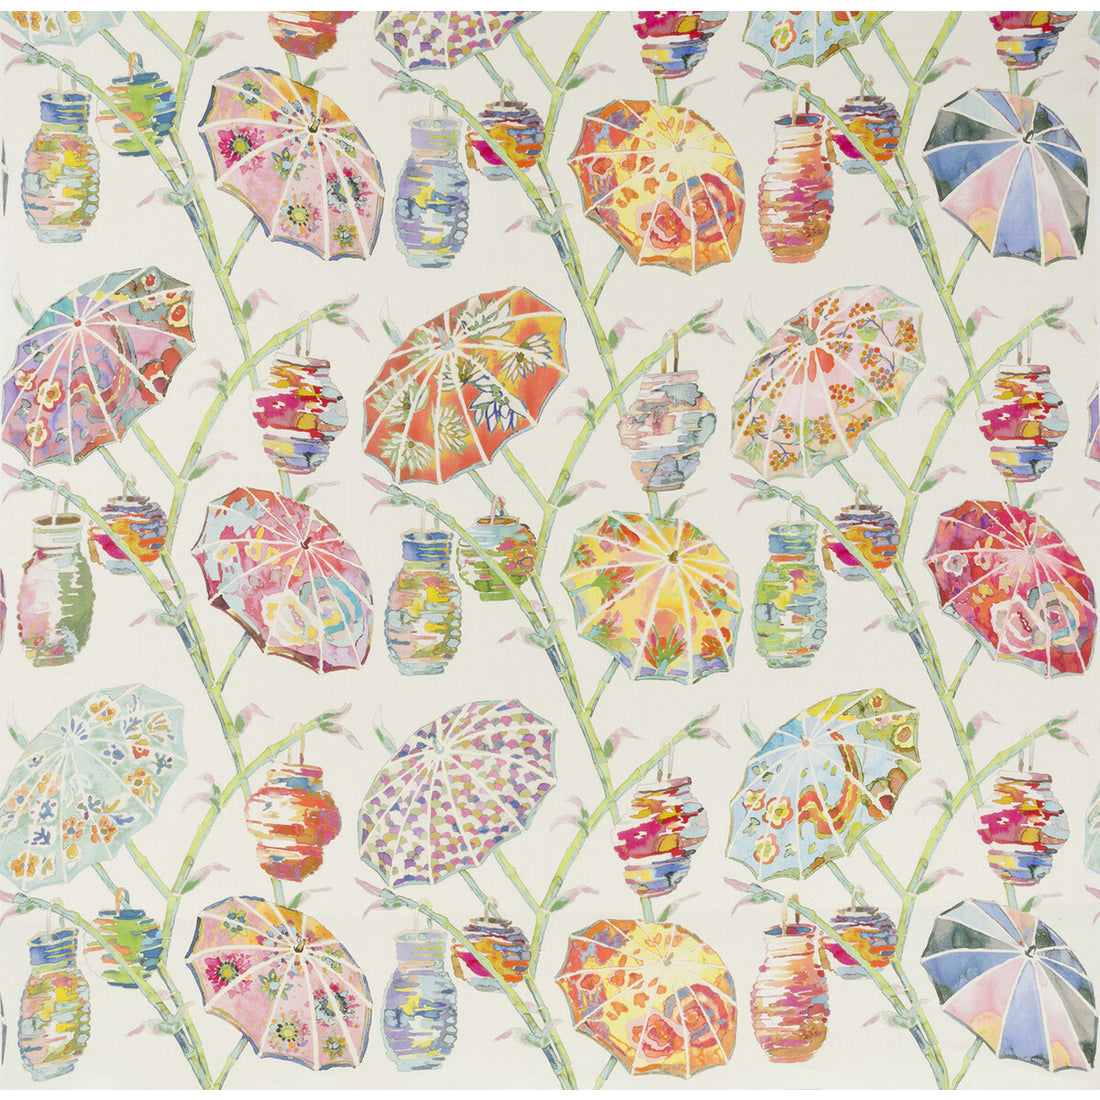 Umbrellas fabric in rainbow color - pattern UMBRELLAS.417.0 - by Kravet Design